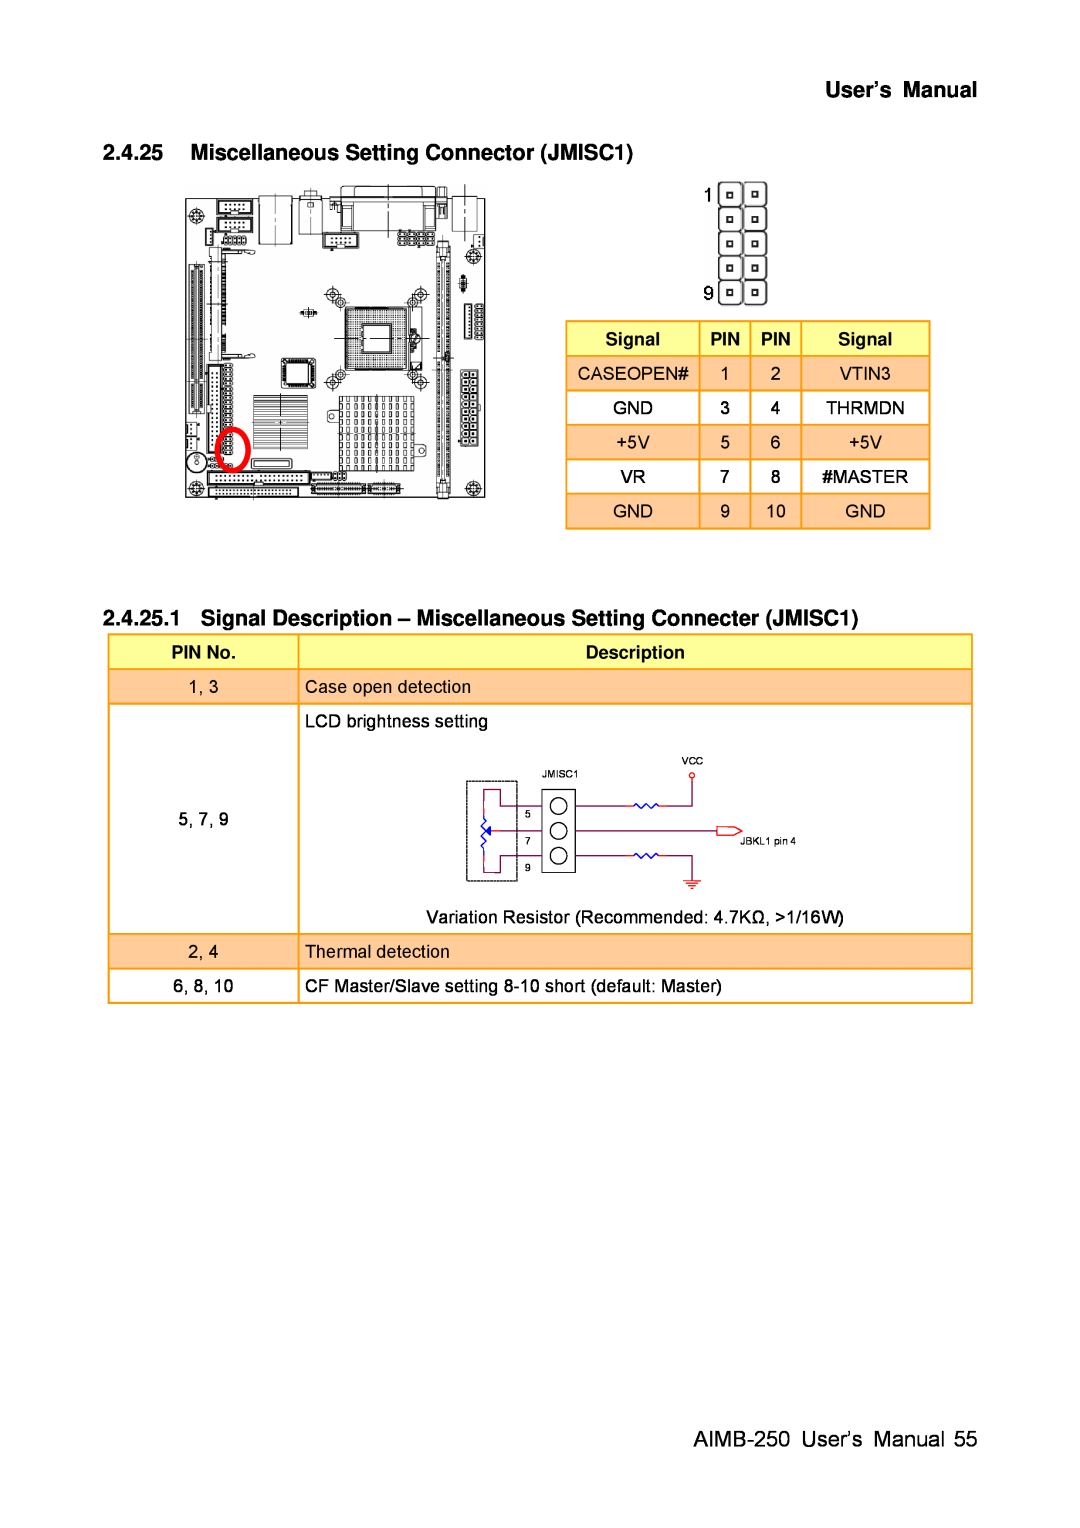 Advantech AIMB-250 user manual User’s Manual 2.4.25 Miscellaneous Setting Connector JMISC1, Signal, PIN No, Description 